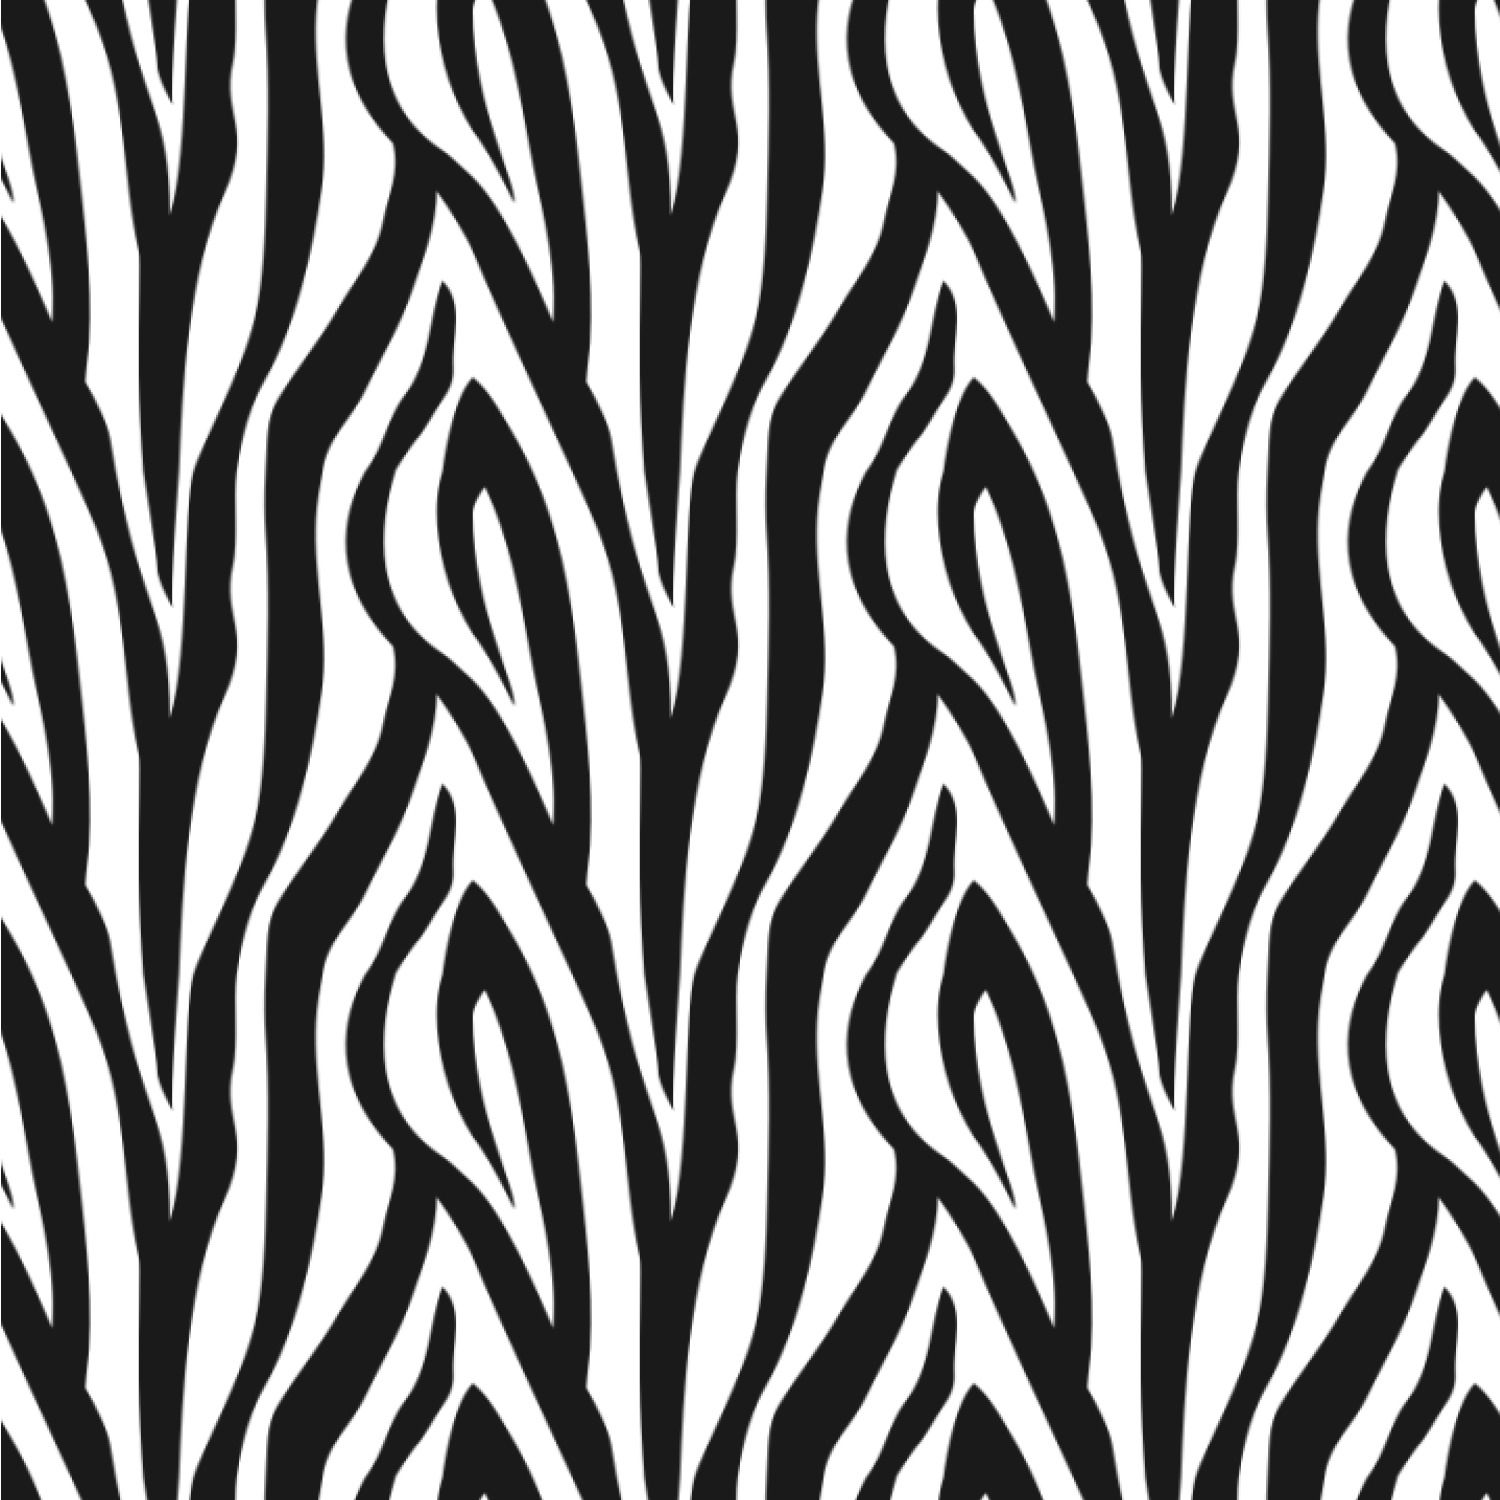 Zebra Print Wallpaper & Surface Covering